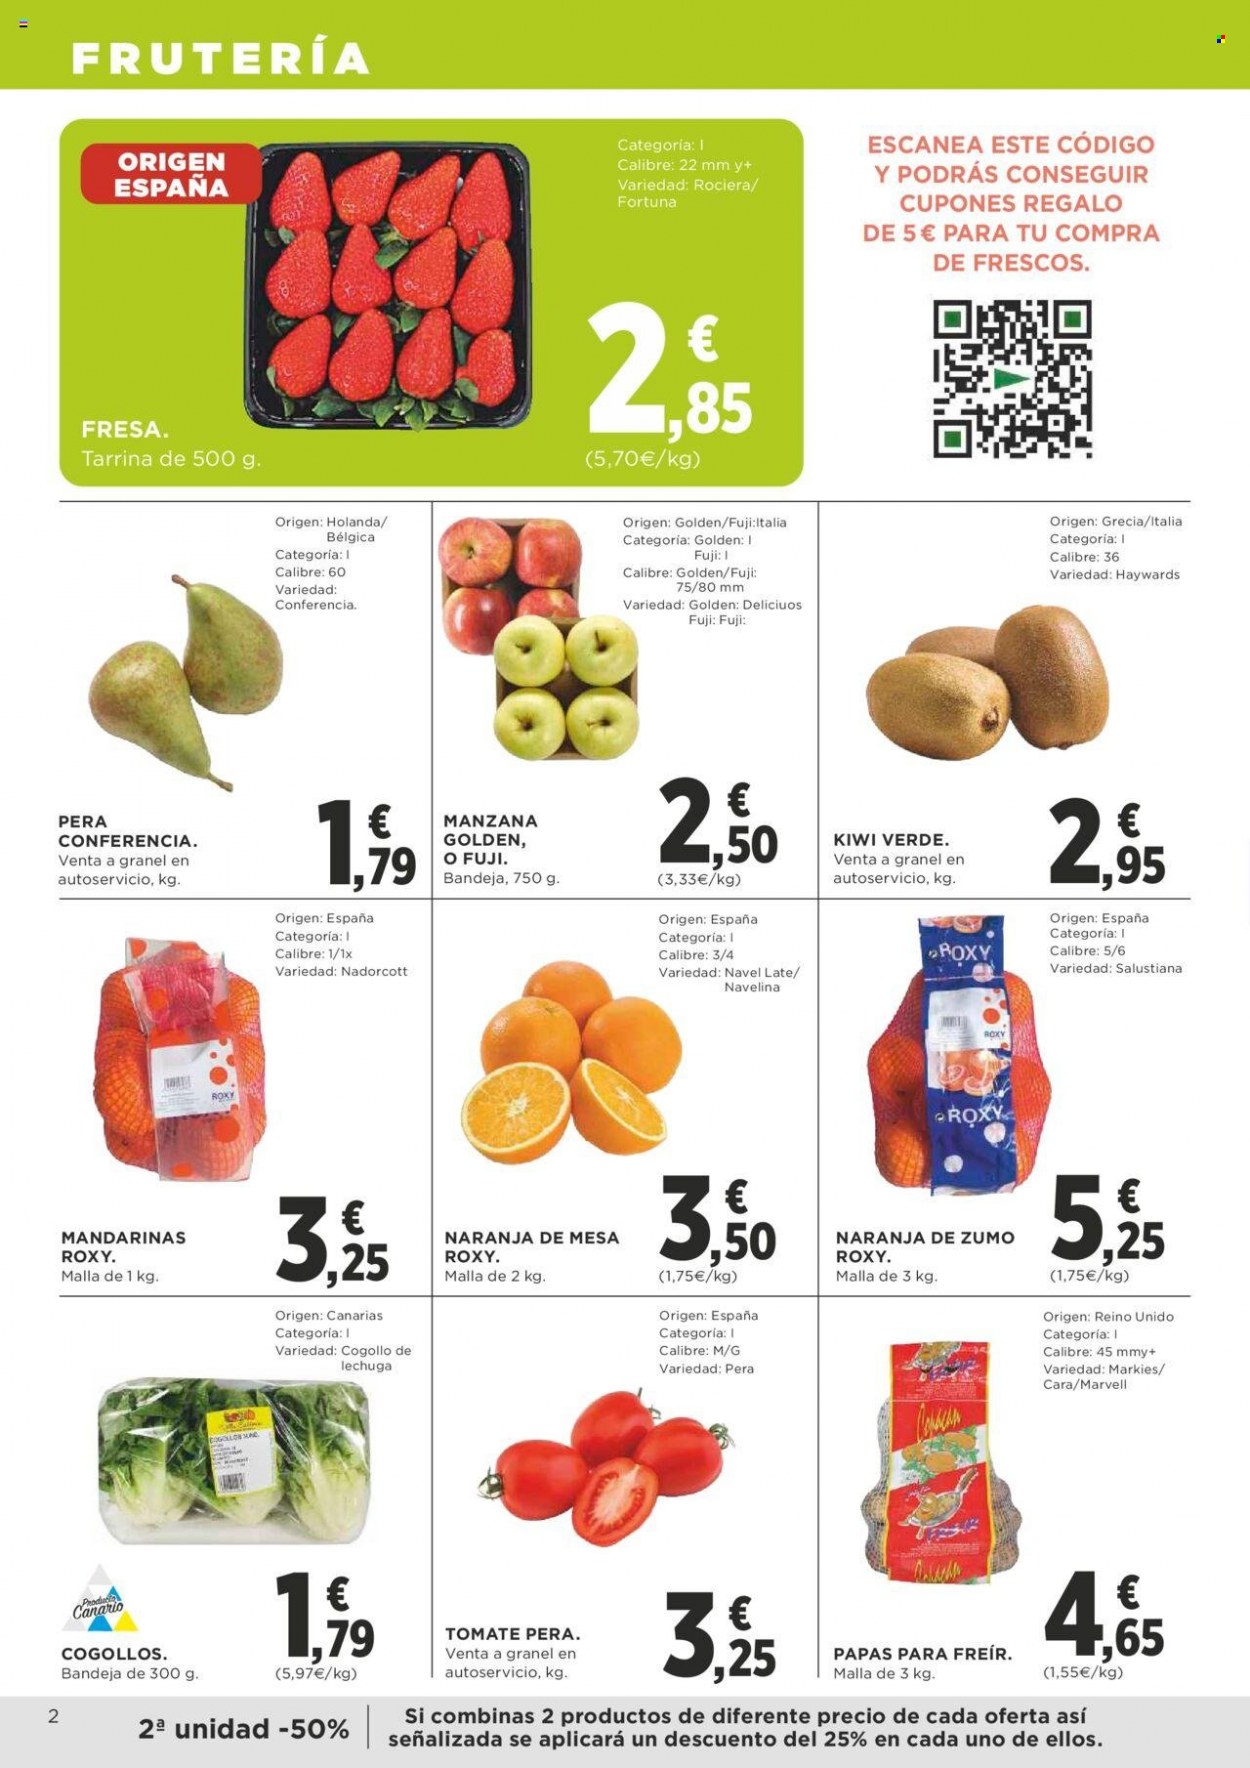 thumbnail - Folleto actual Supercor supermercados - 23/03/23 - 04/04/23 - Ventas - fresa, mandarina, naranja, tomate, papa, cogollo. Página 2.